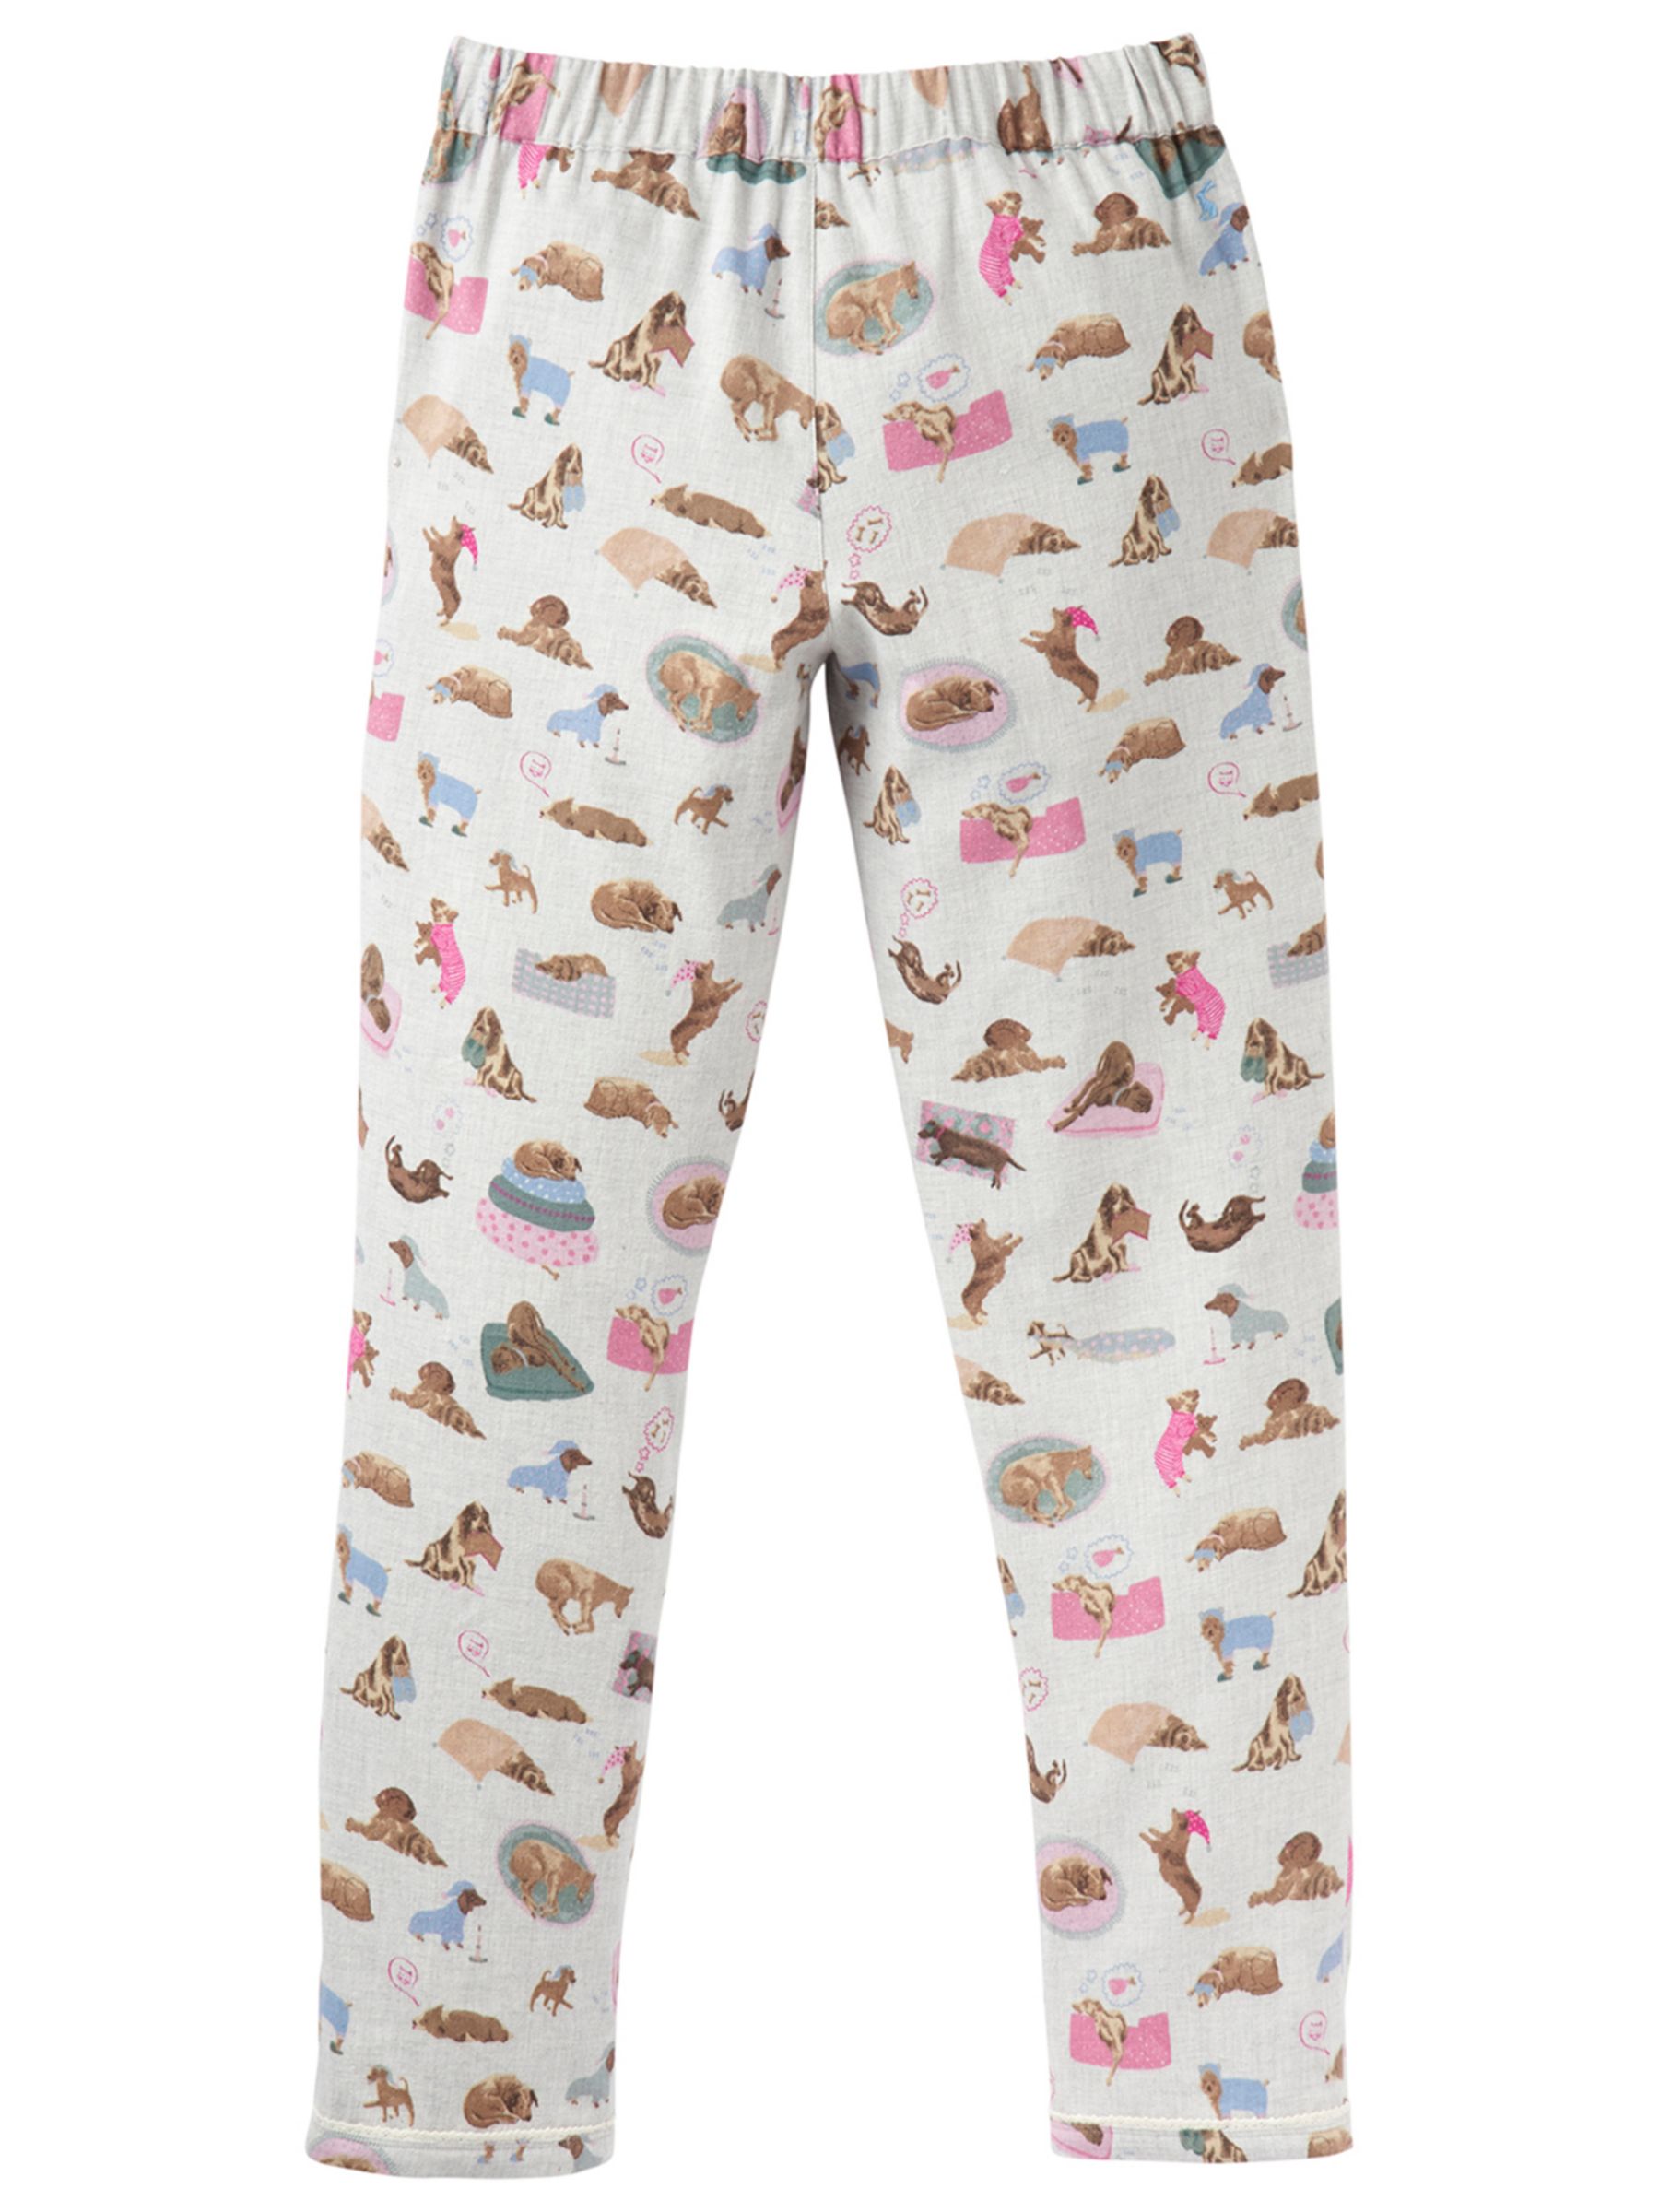 Joules Snooze Dog Print Cotton Pyjama Bottoms, Grey/Multi at John Lewis ...